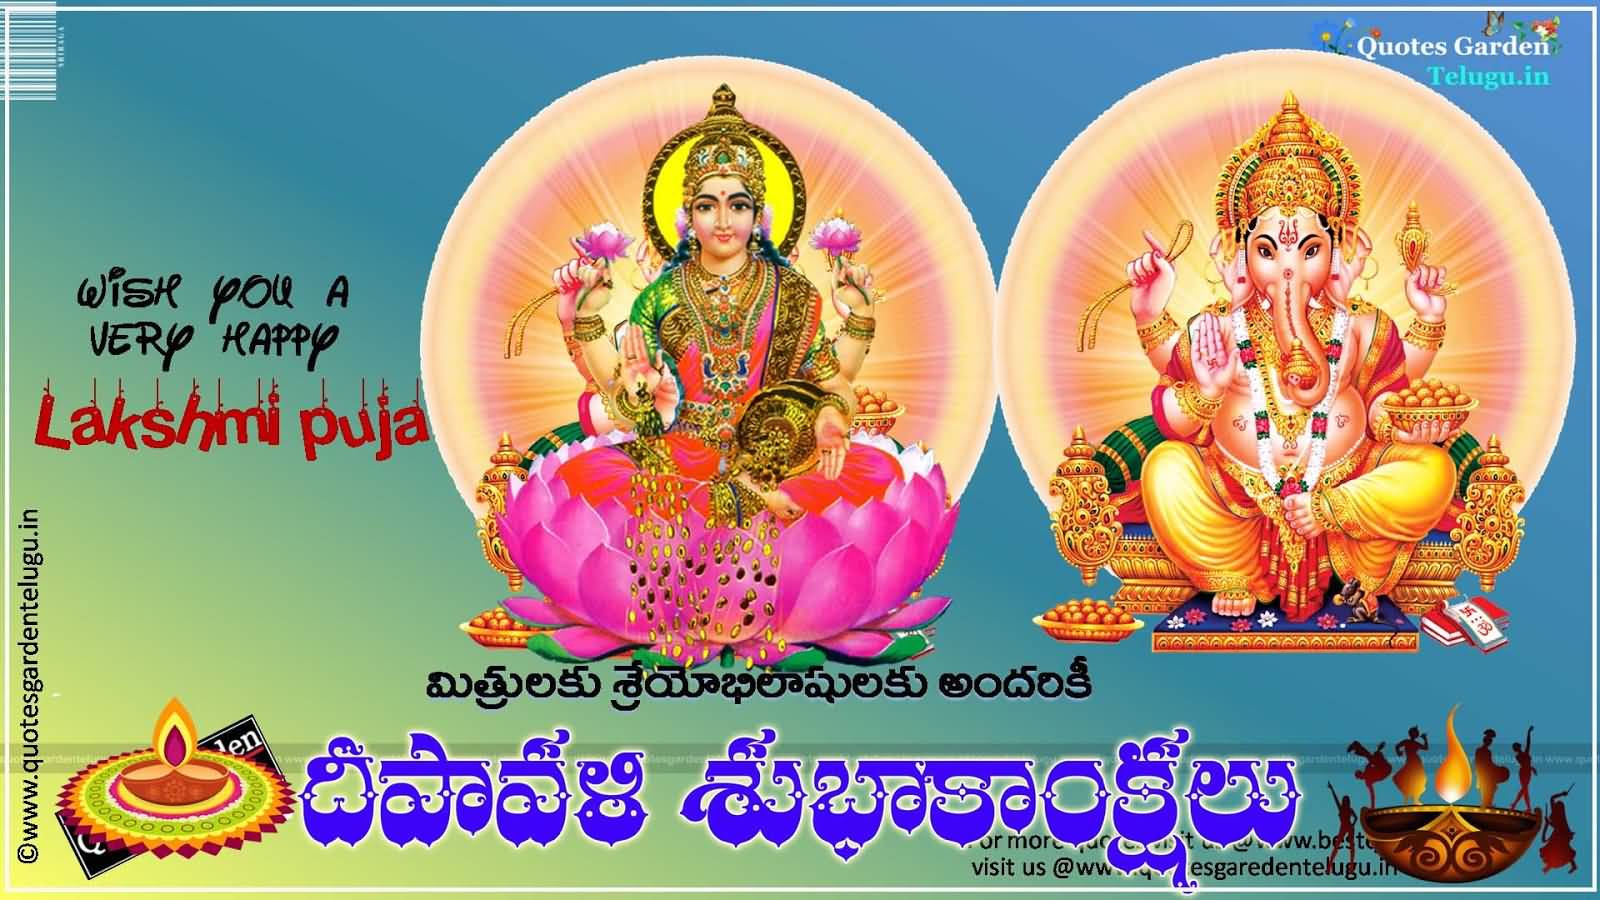 Wish You A Very Happy Lakshmi Puja Wishes In Telugu